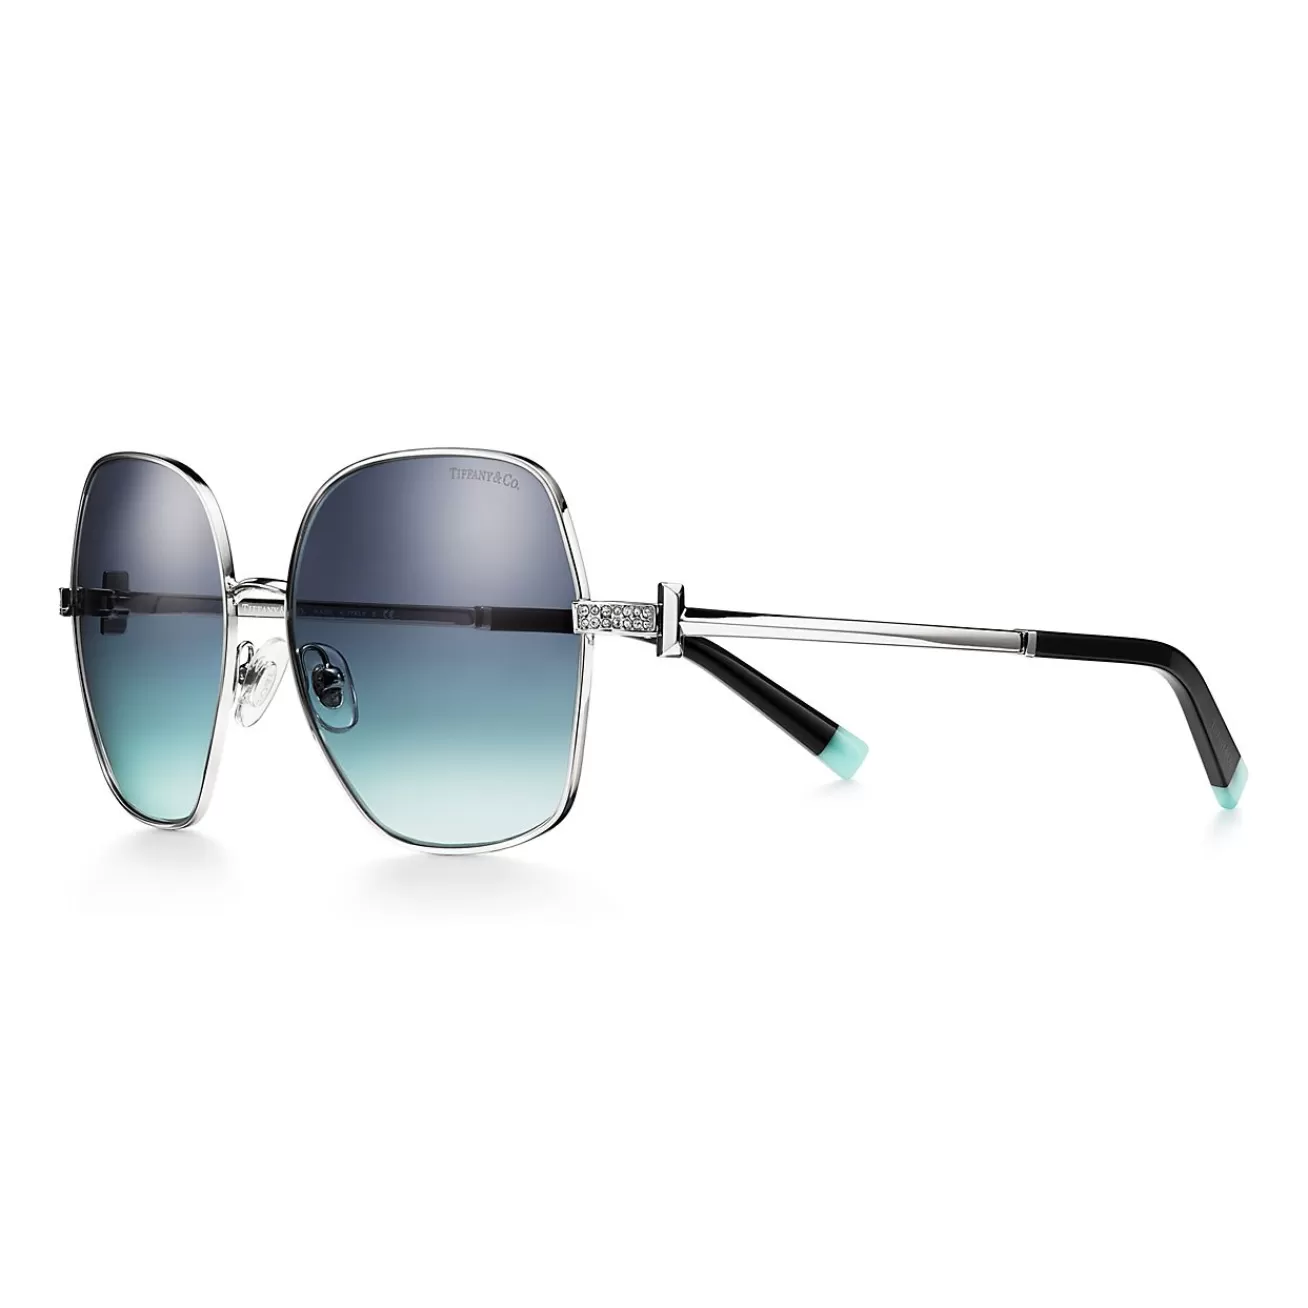 Tiffany & Co. Tiffany T Sunglasses in Silver-colored Metal with Gradient Tiffany Blue® Lenses | ^ Tiffany T | Sunglasses